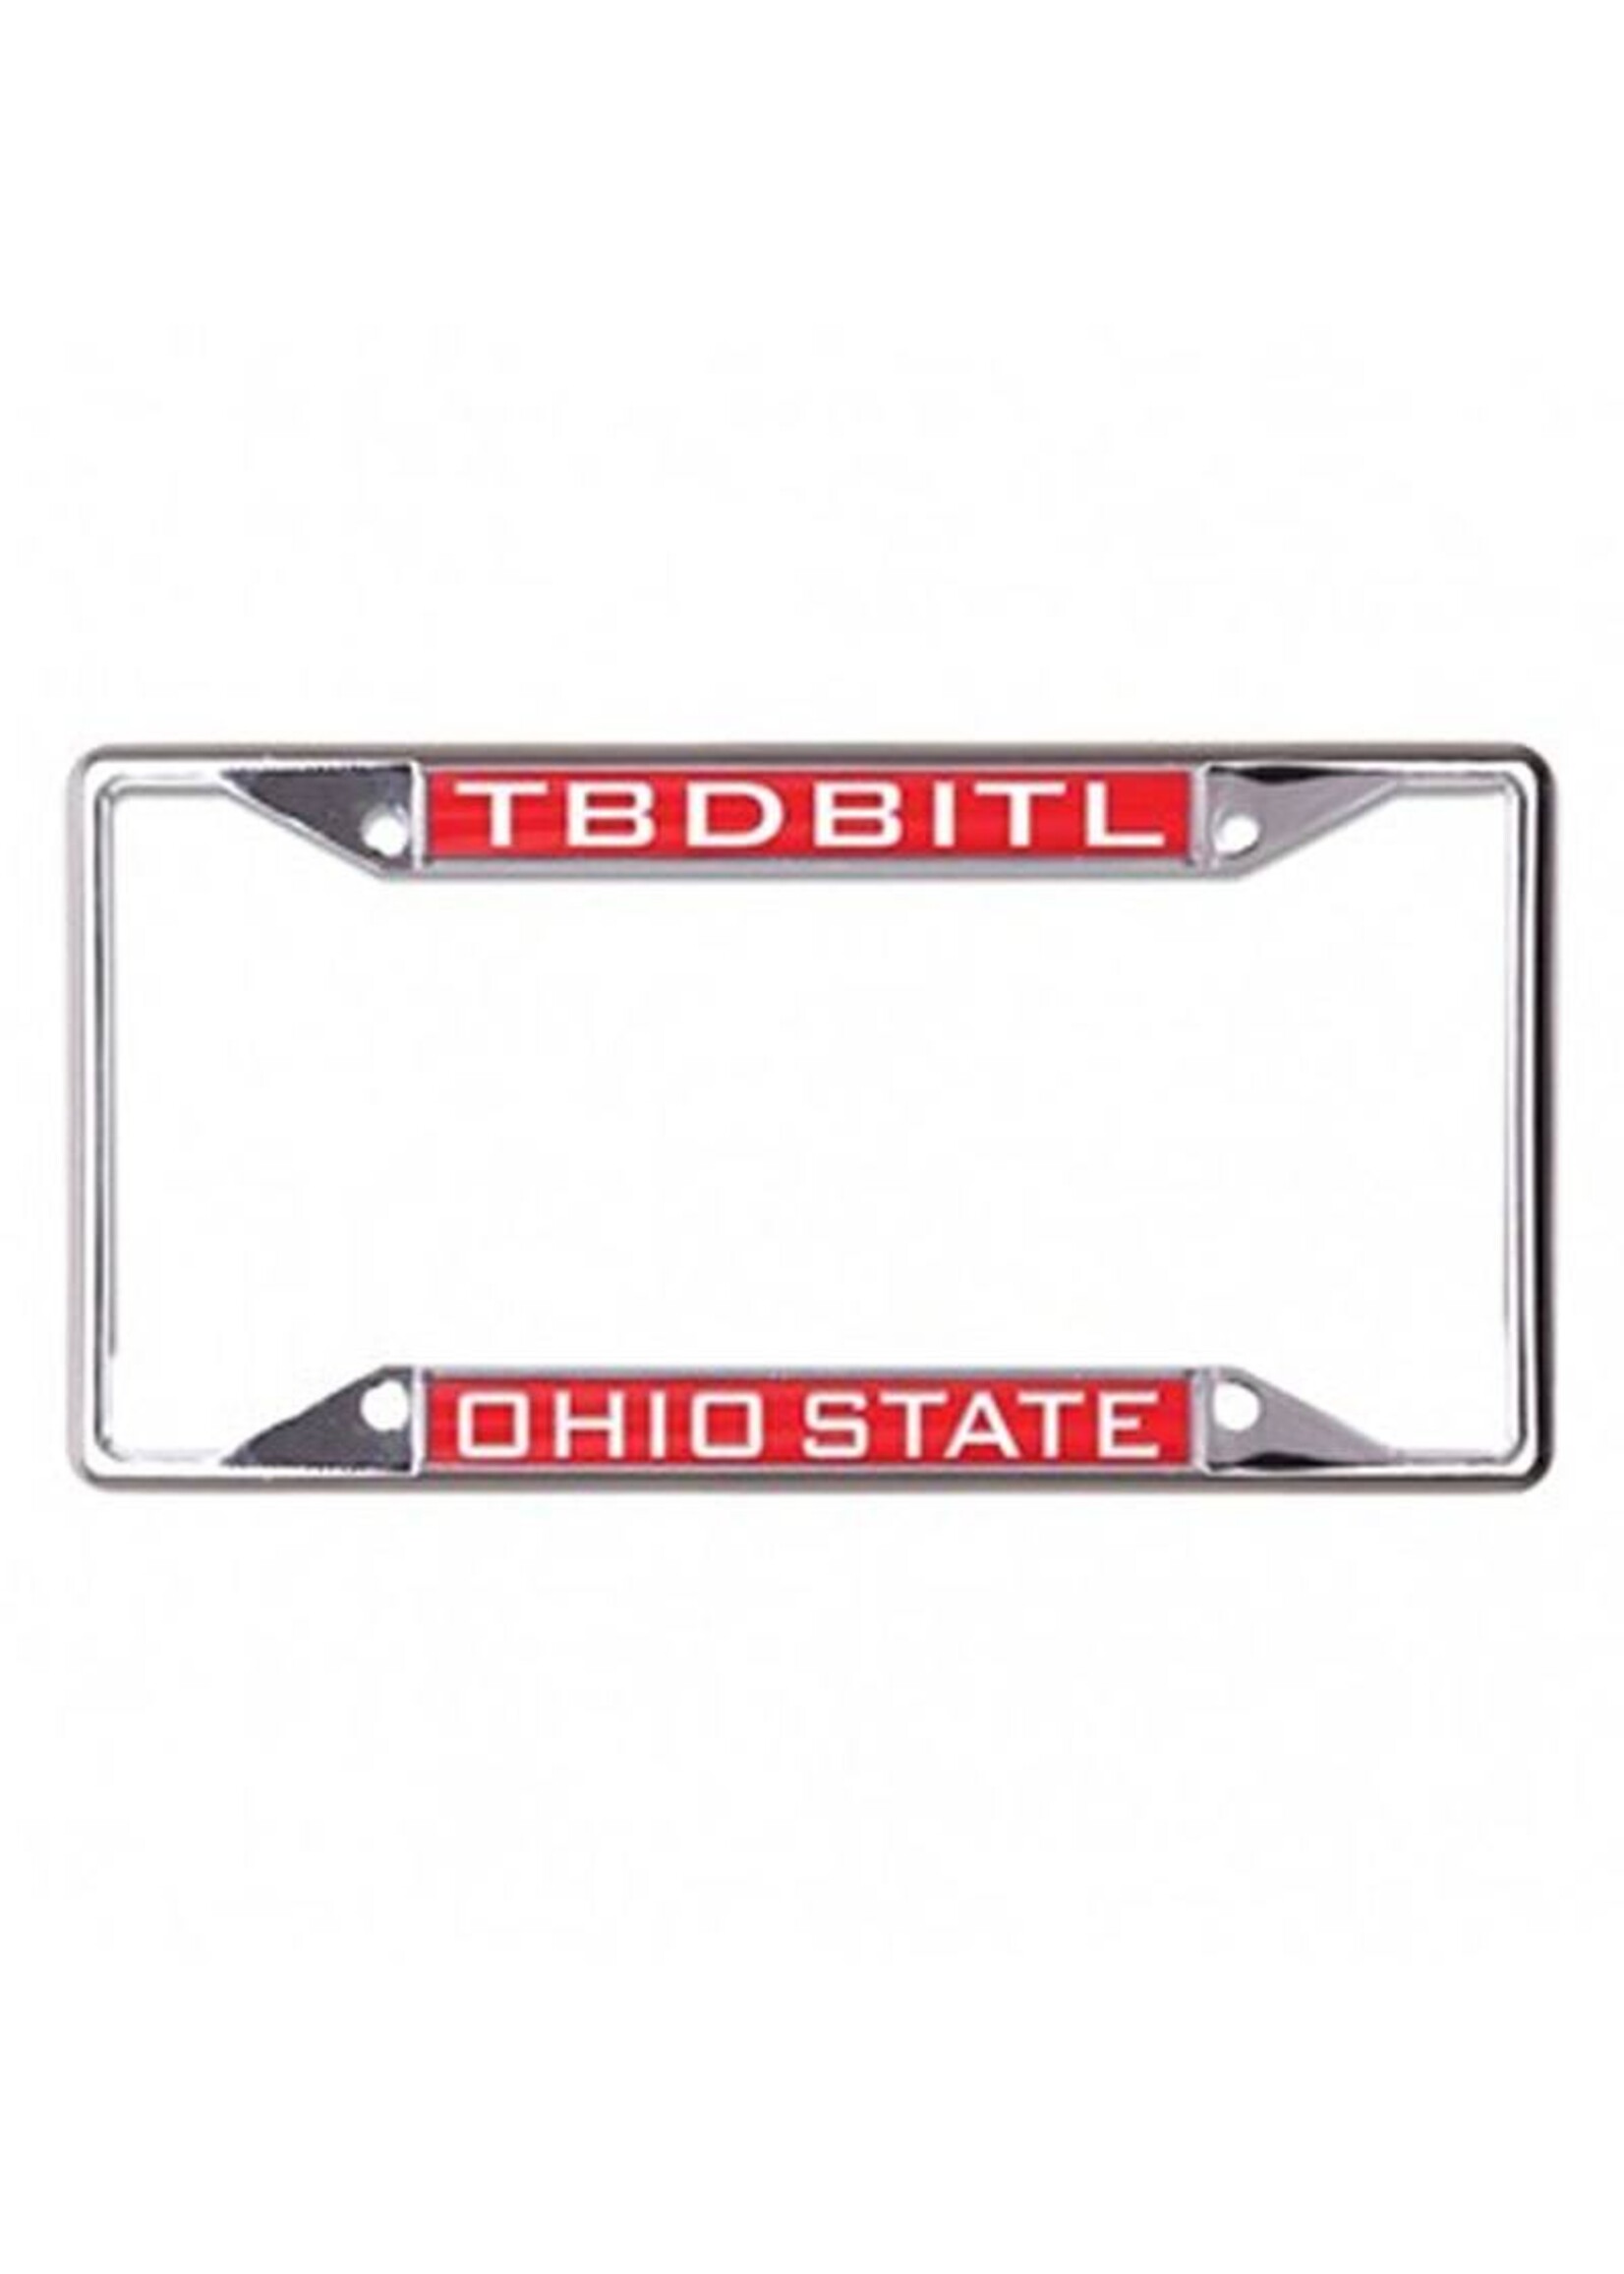 Wincraft Ohio State Buckeyes TBDBITL License Plate Frame